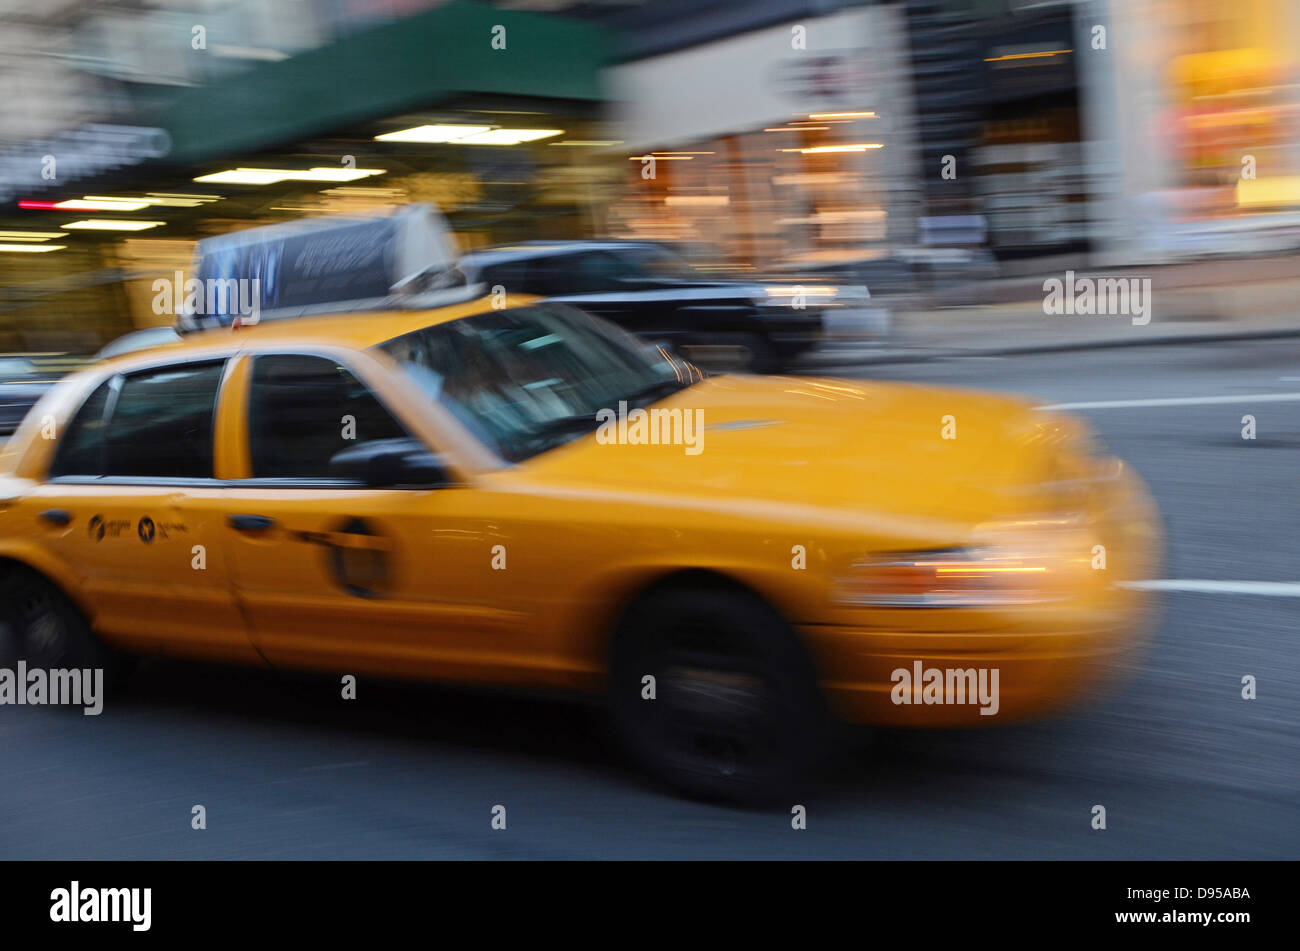 Yellow Cabs in SoHo area, Manhattan, New York City Stock Photo